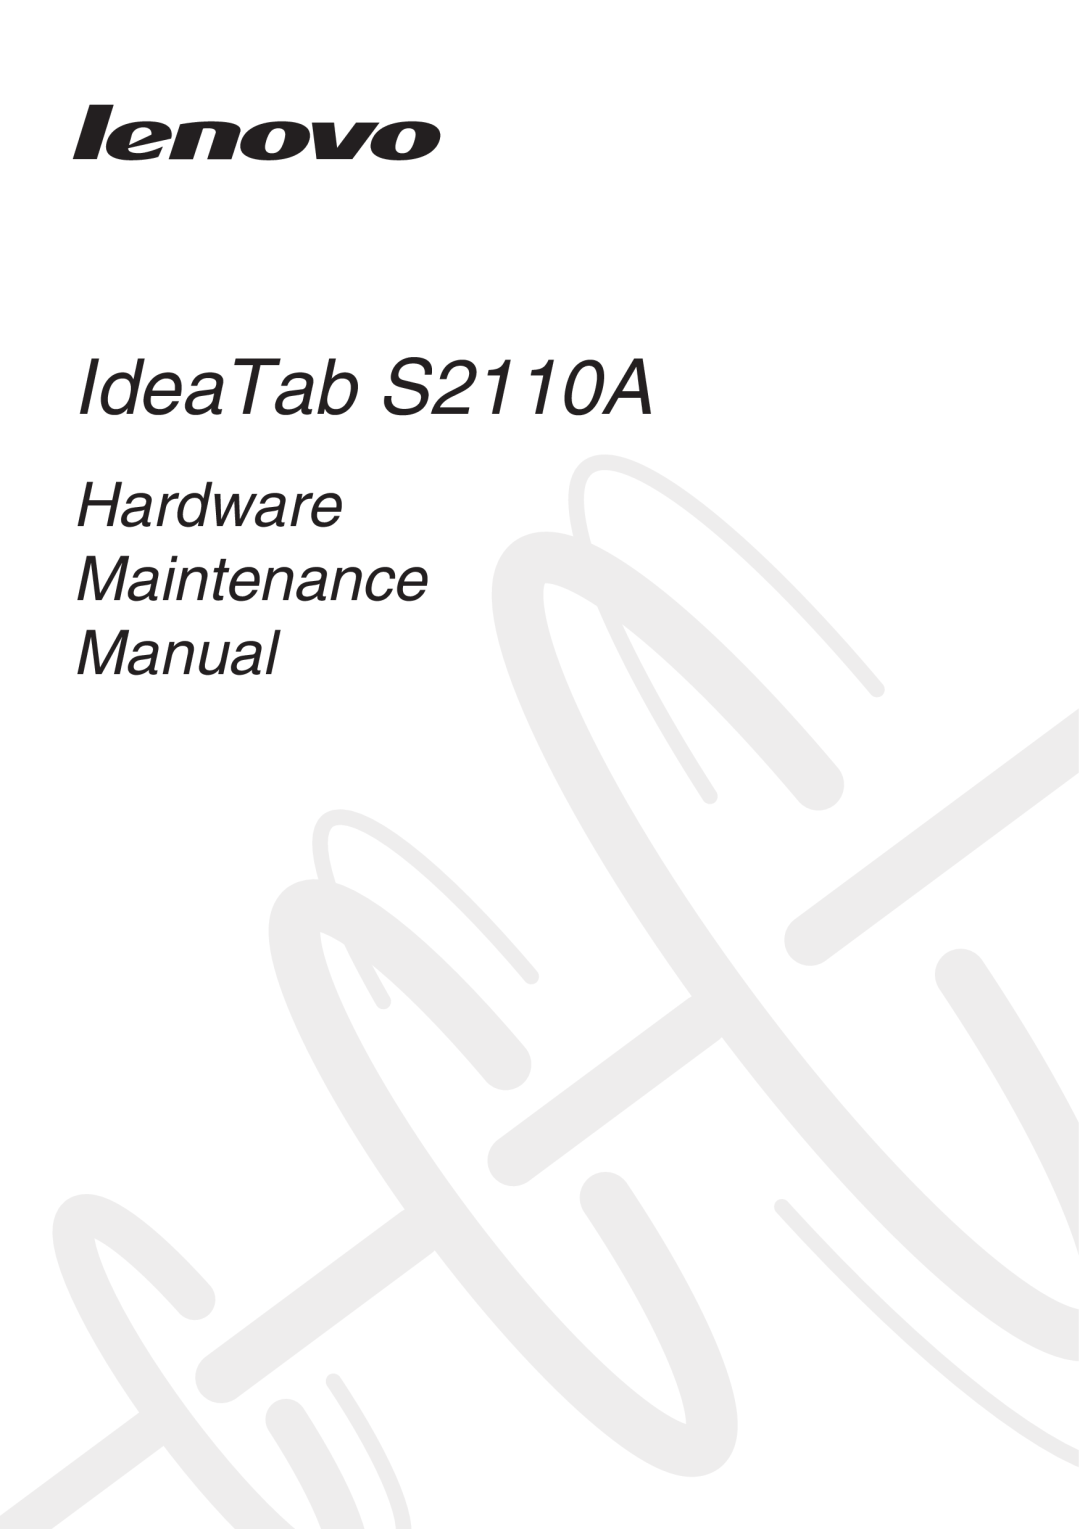 Lenovo manual IdeaTab S2110A, Hardware Maintenance Manual 